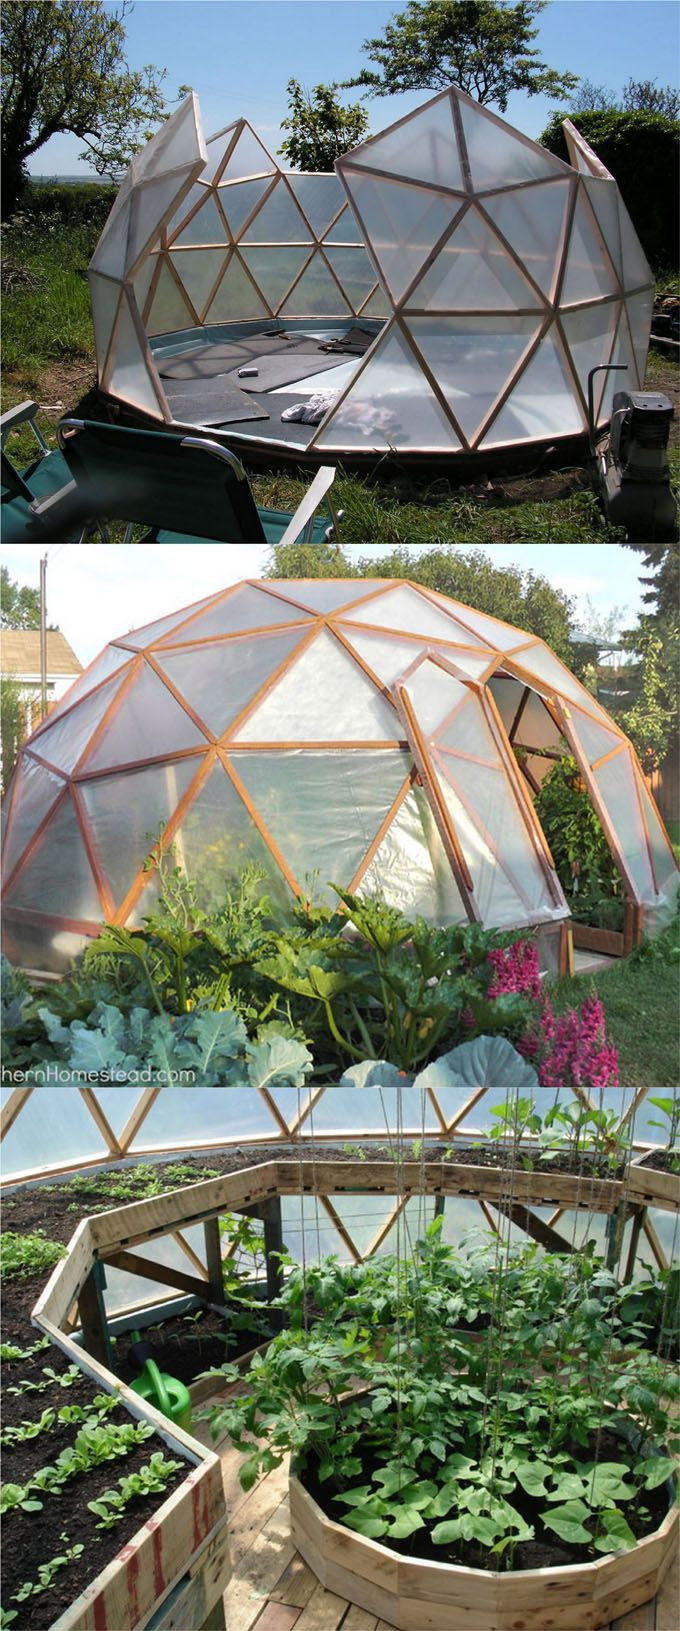 Diy Gewächshaus
 42 Best DIY Greenhouses with Great Tutorials and Plans